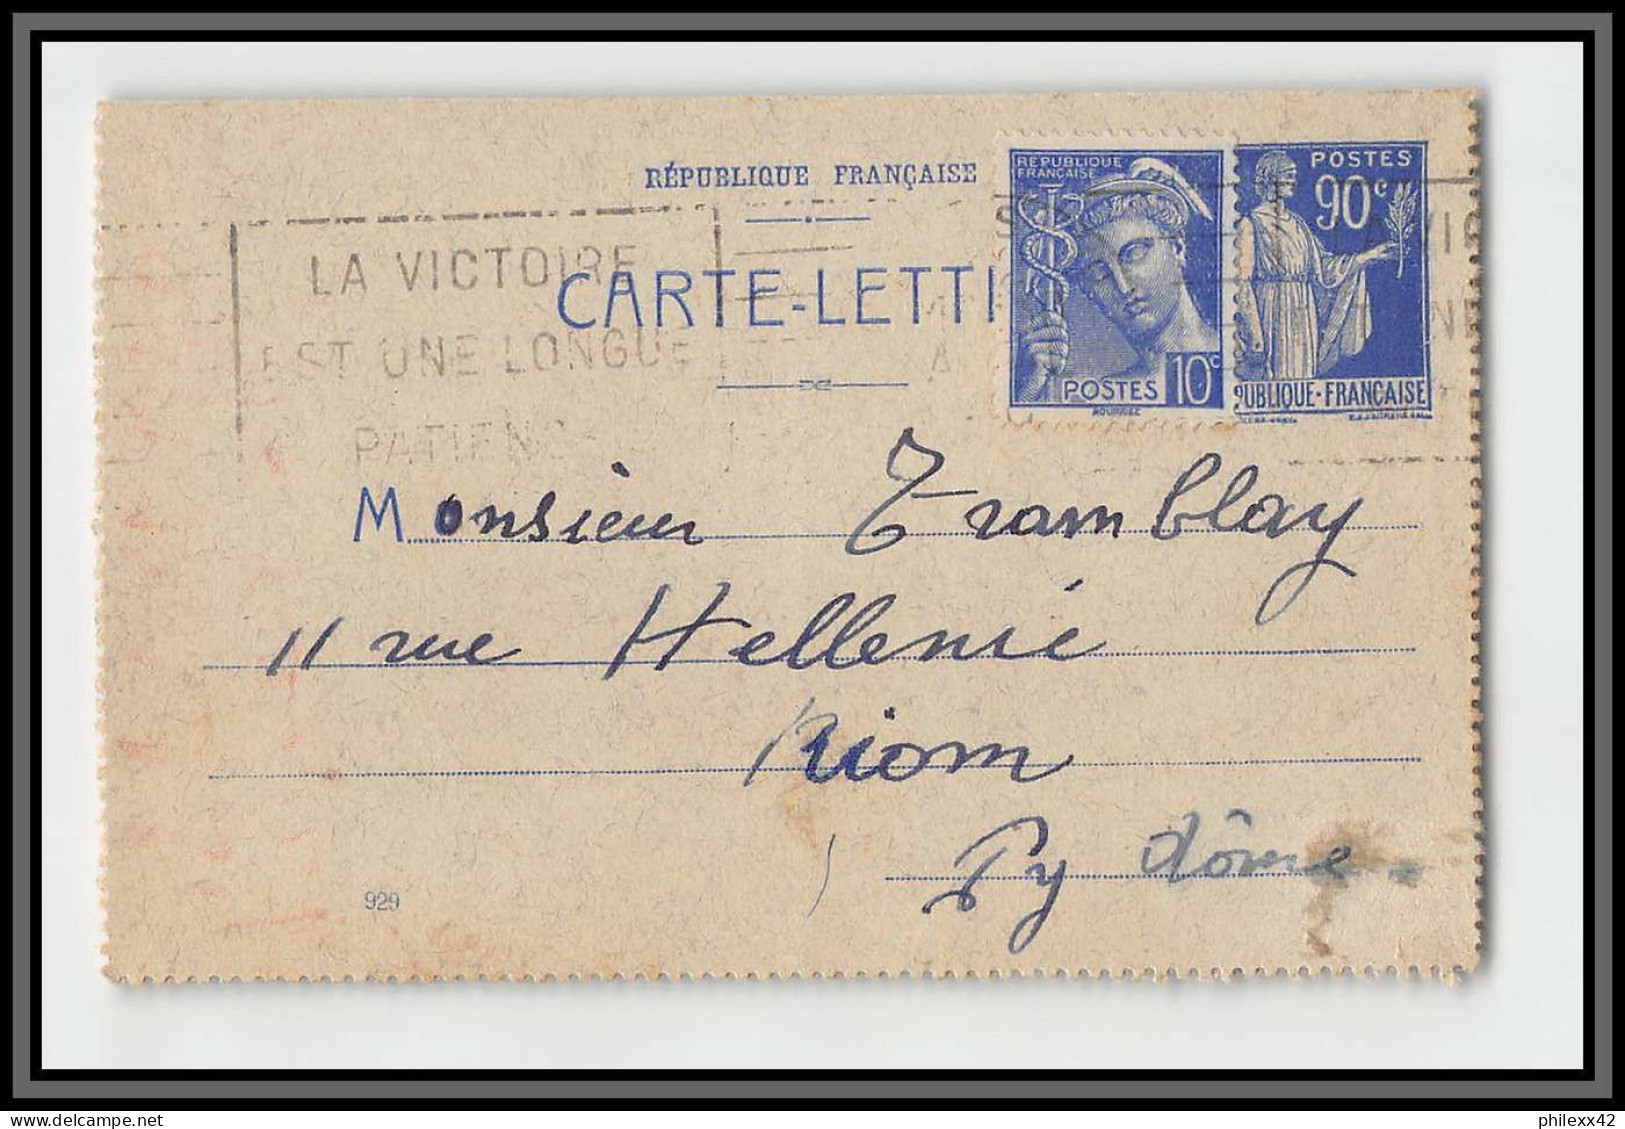 75160 90c Bleu PAI F2 Date 929 Krag Paris Riom 1940 Paix Entier Postal Stationery Carte Lettre France - Kartenbriefe